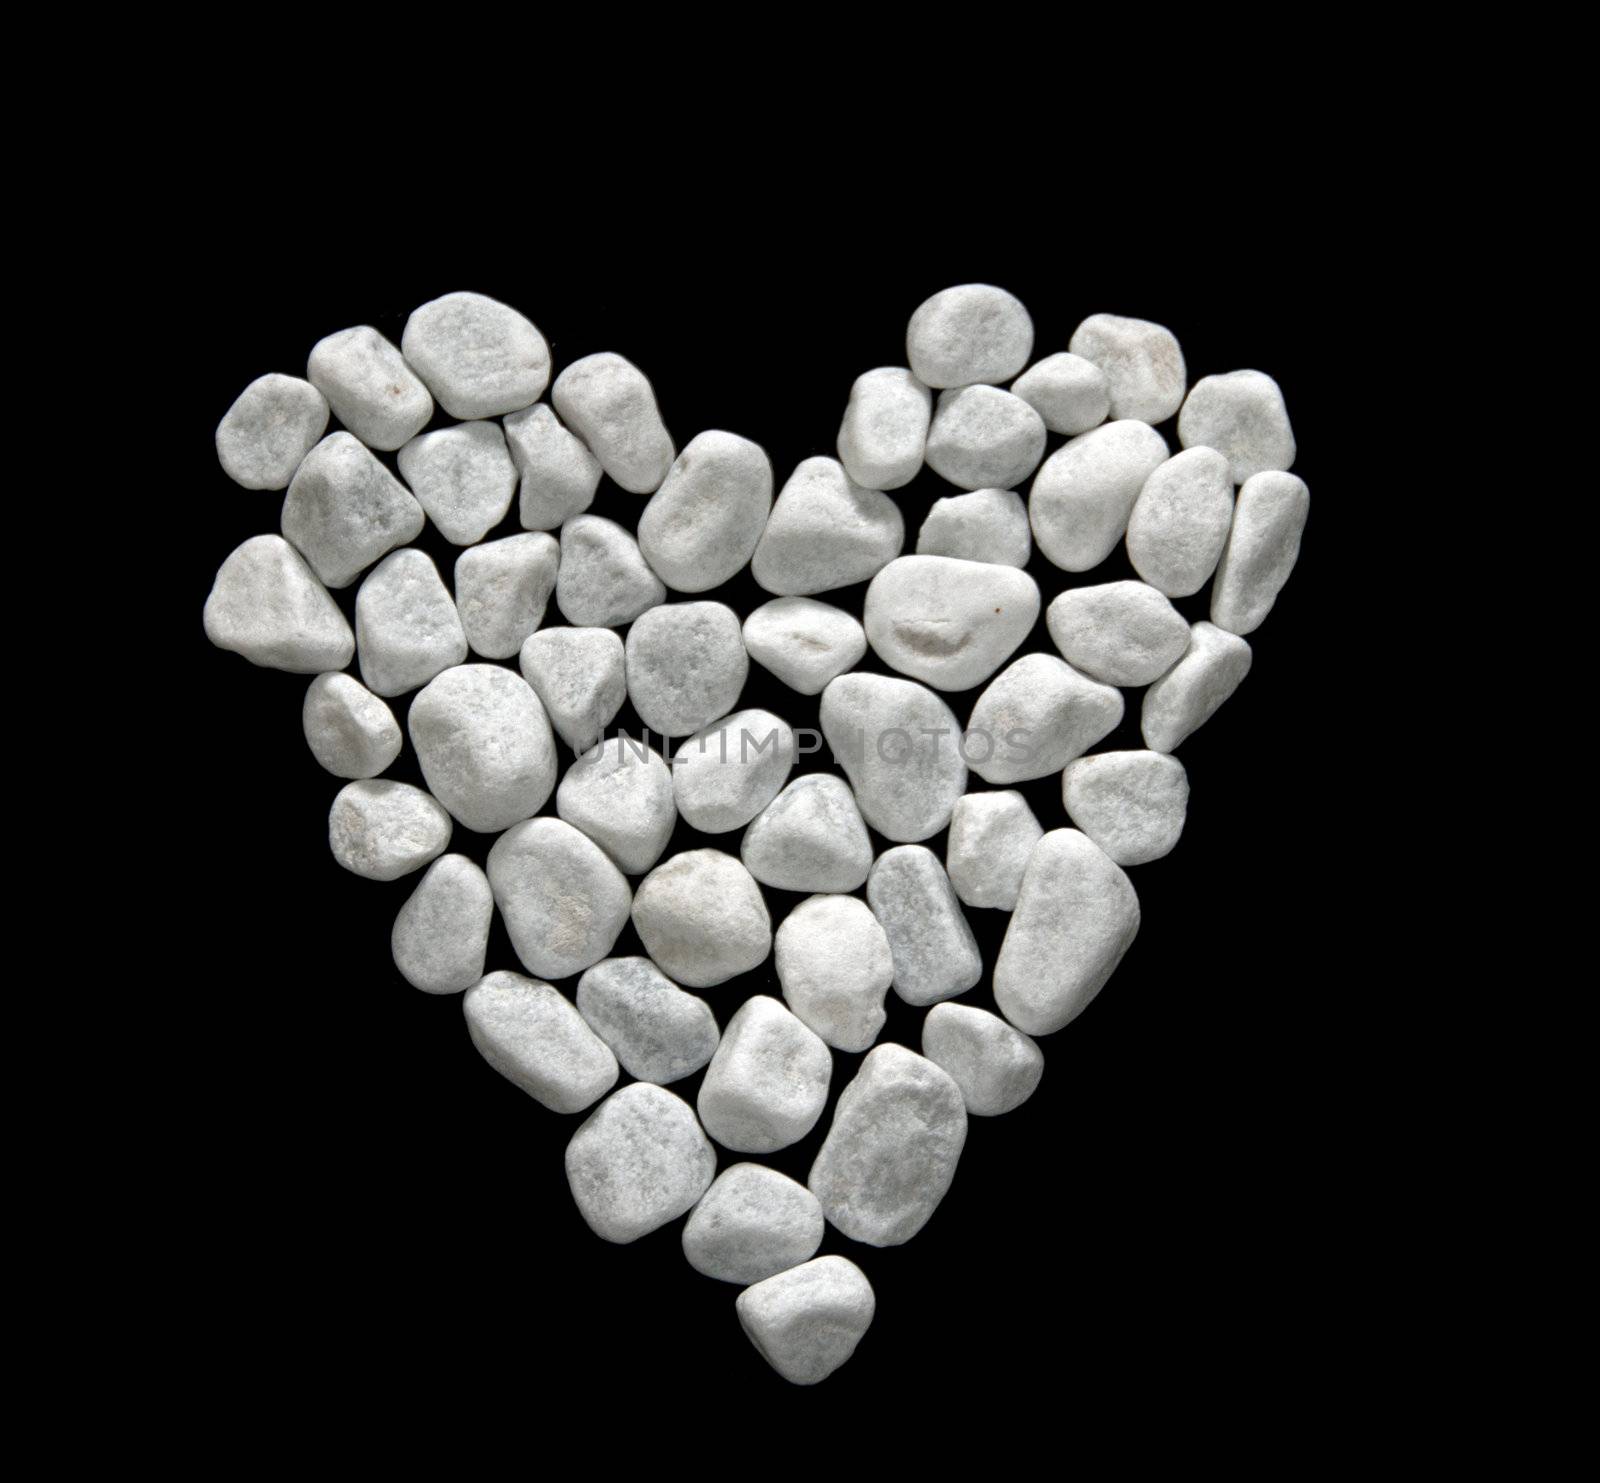 white stones on black background make the heart